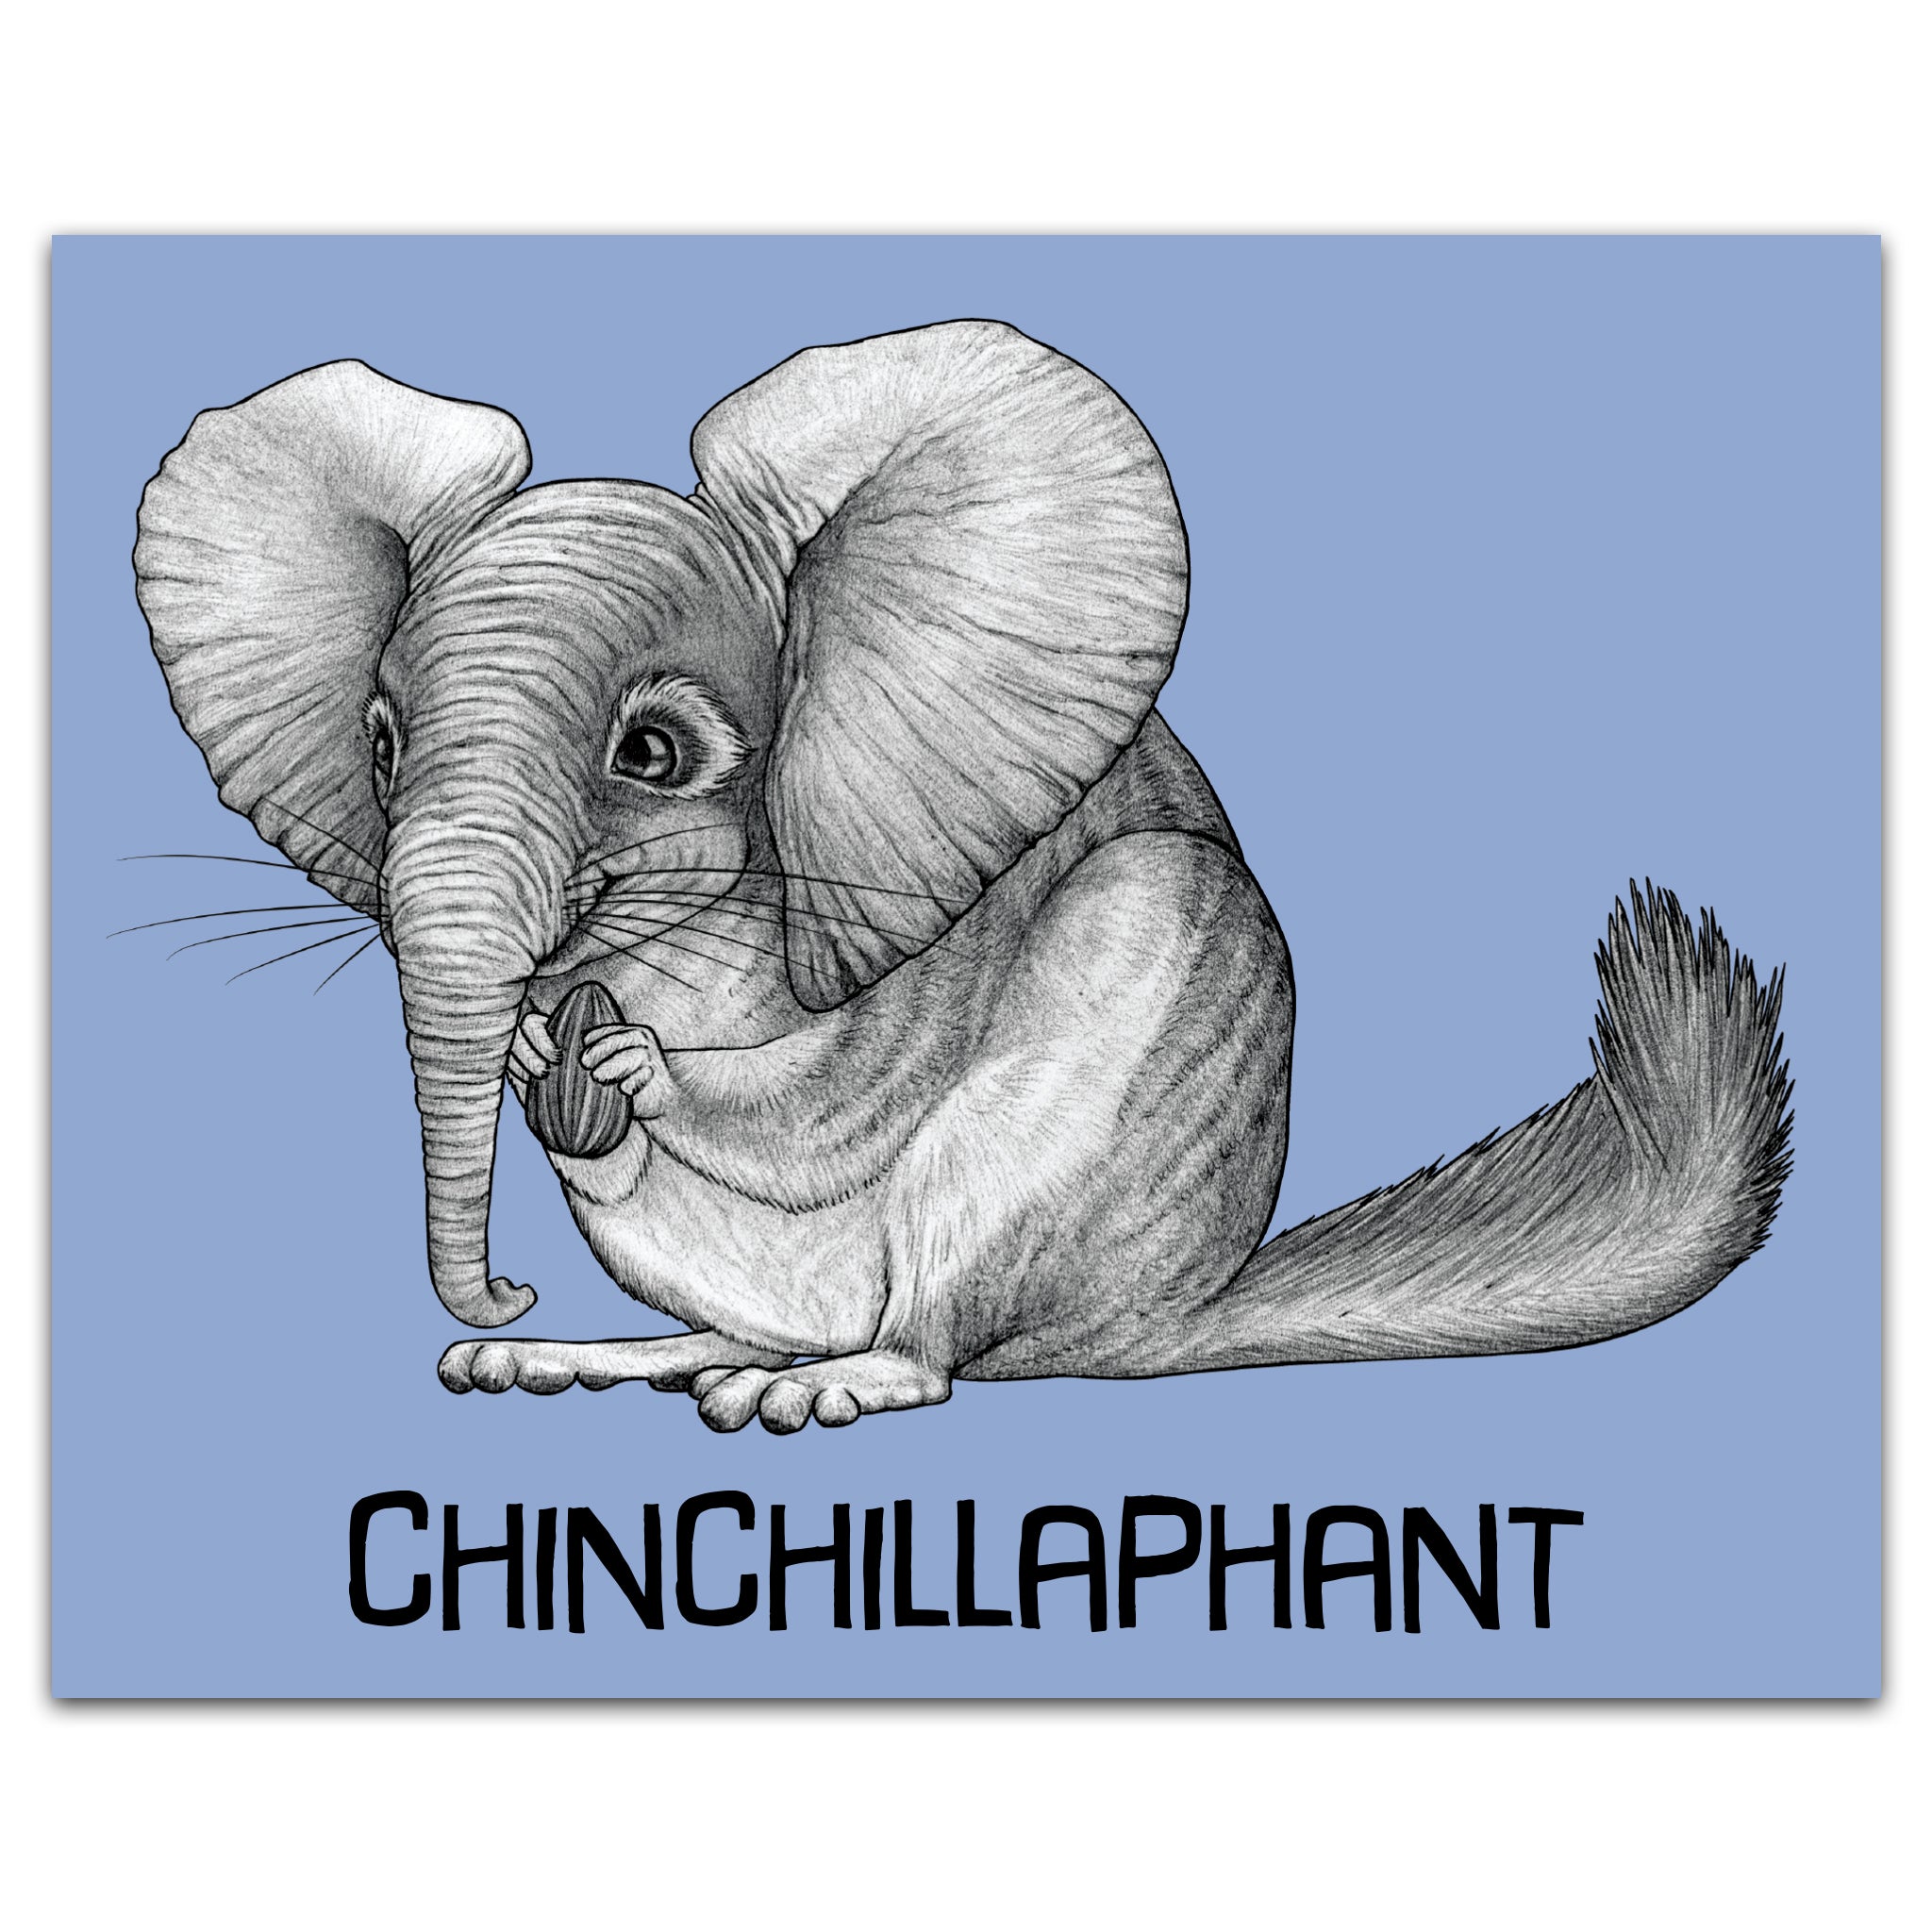 Chinchillaphant | Chinchilla + Elephant Hybrid Animal | 8x10" Color Print